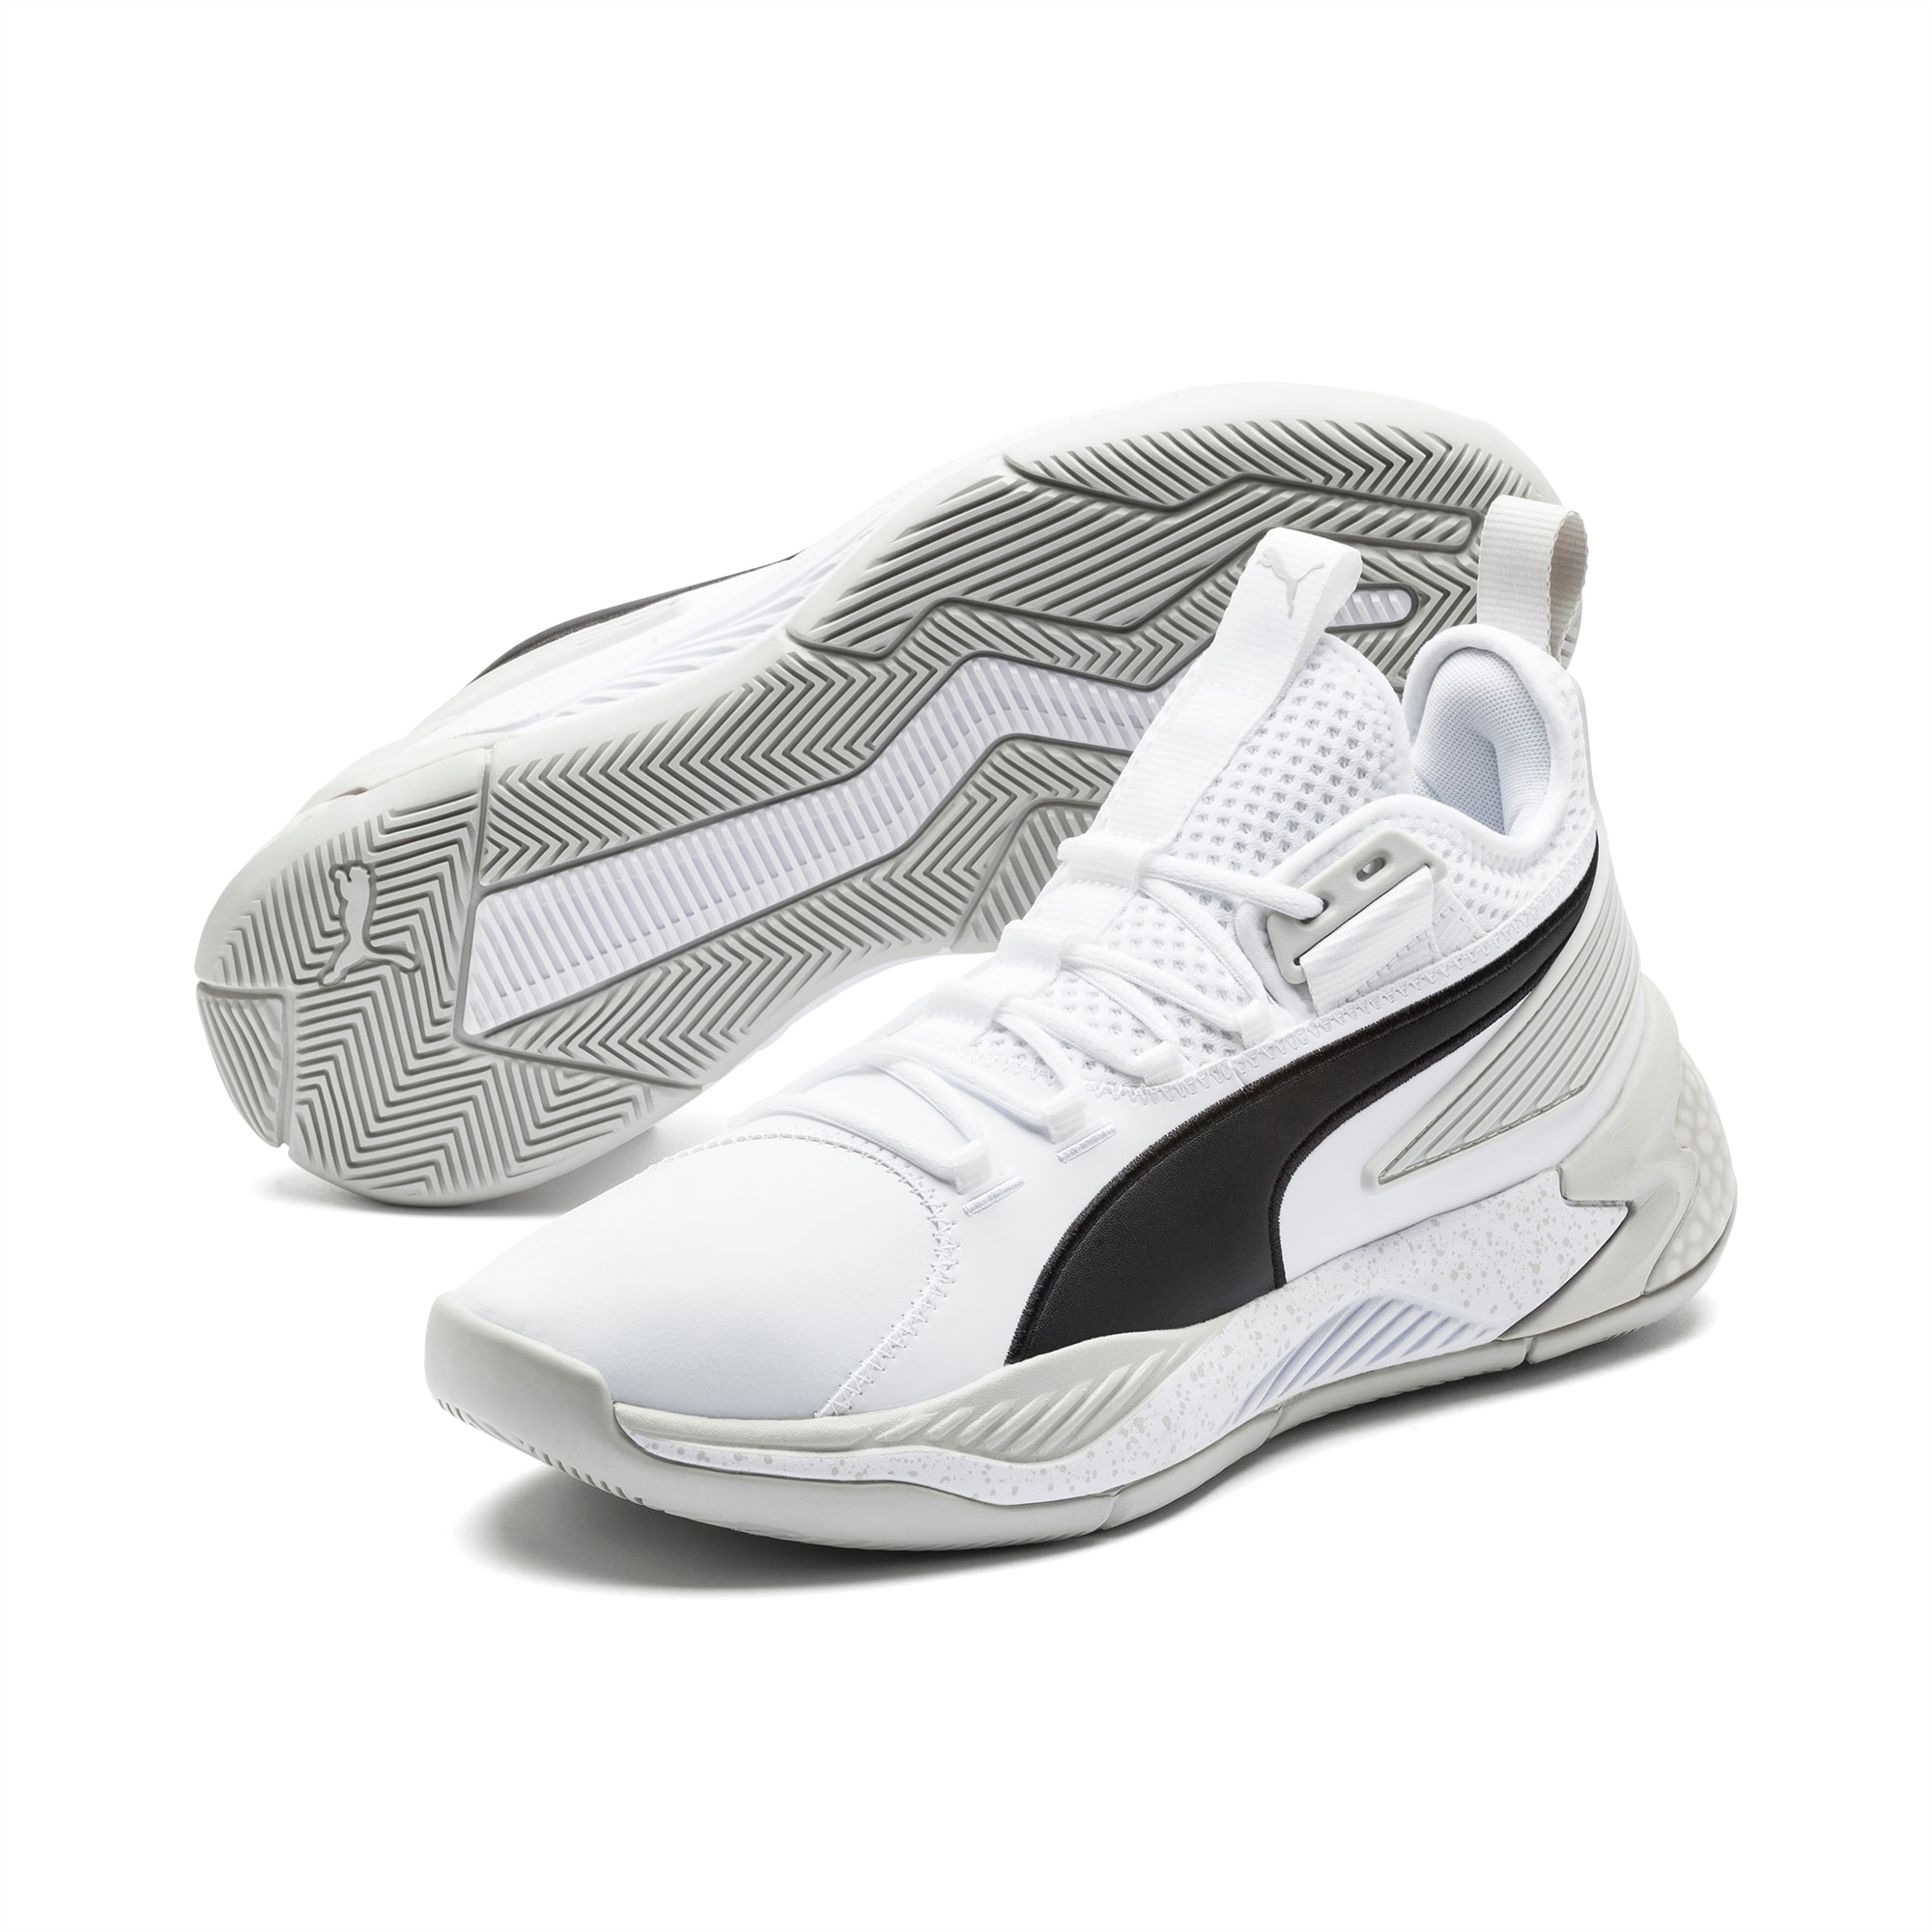 puma basketball shoes grey